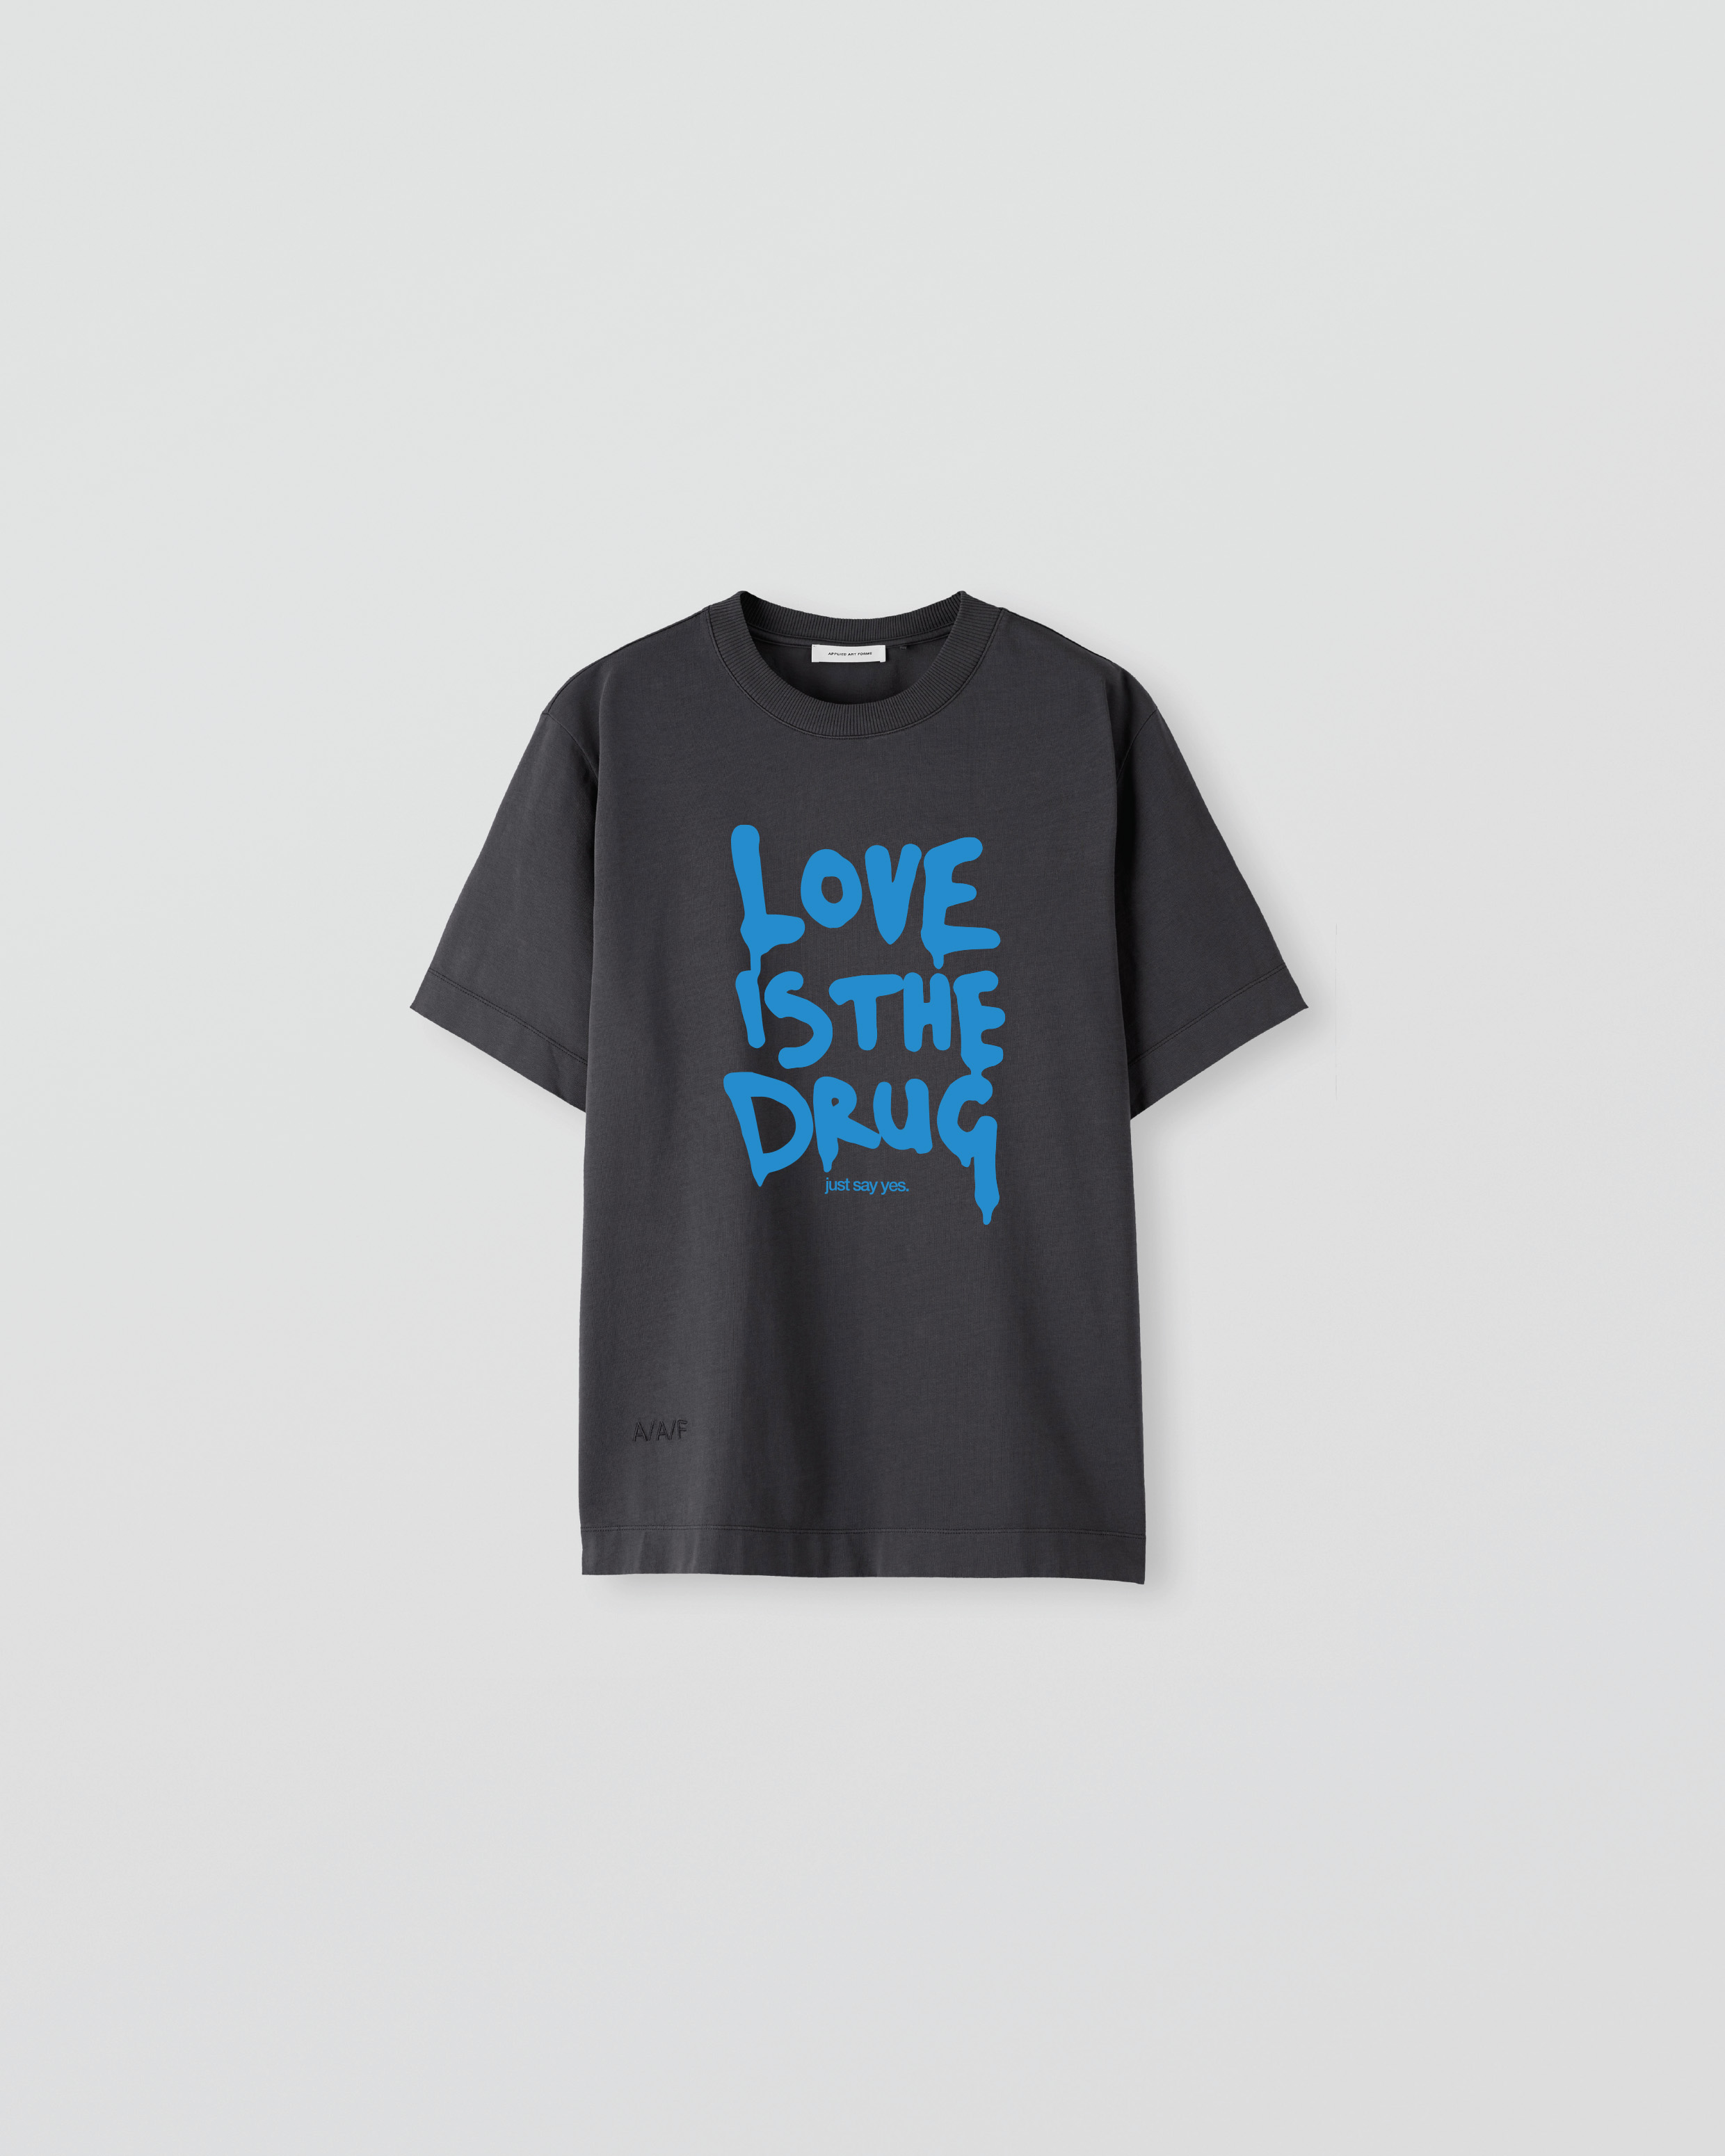 APPLIED ART FORMS LM1-1 T-Shirt Ecru & Black [Love is the Drug]